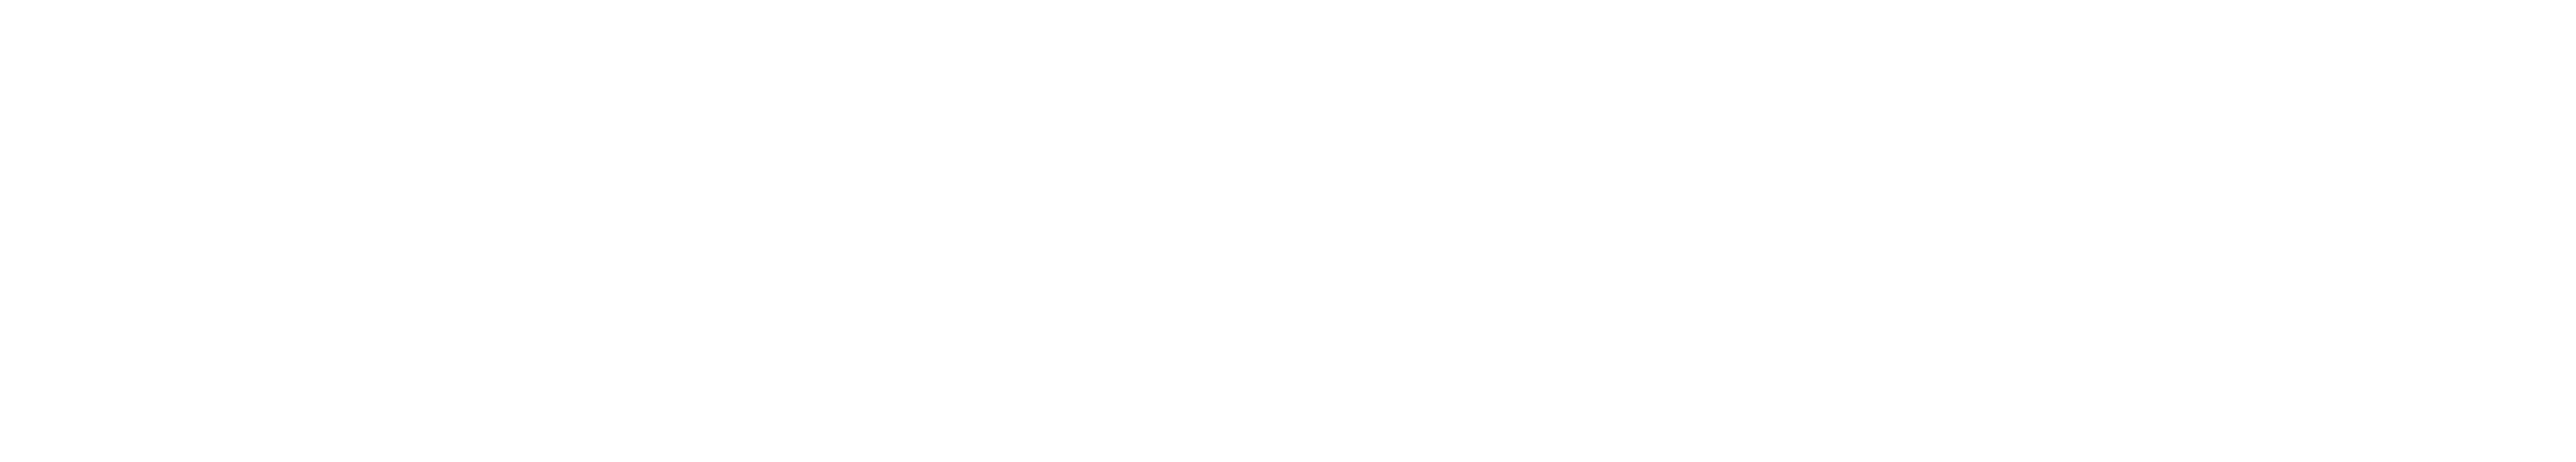 Rapaport logo_V2 (1)